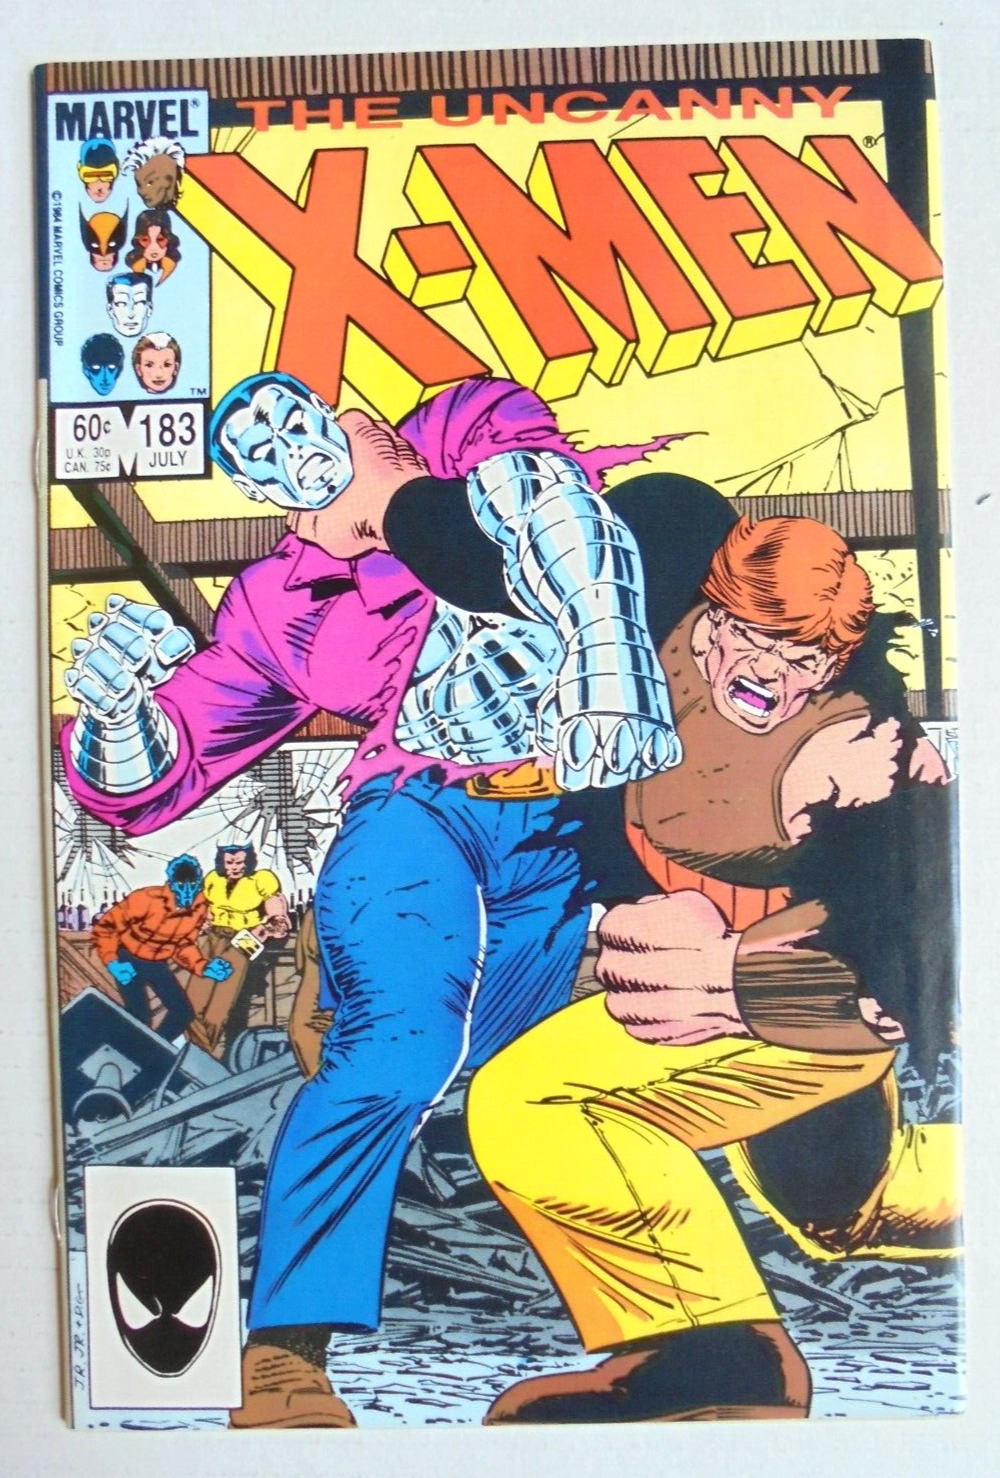 UNCANNY X-MEN #183 (MARVEL,1984) COLOSSUS VS JUGGERNAUT HIGH GRADE LOOK